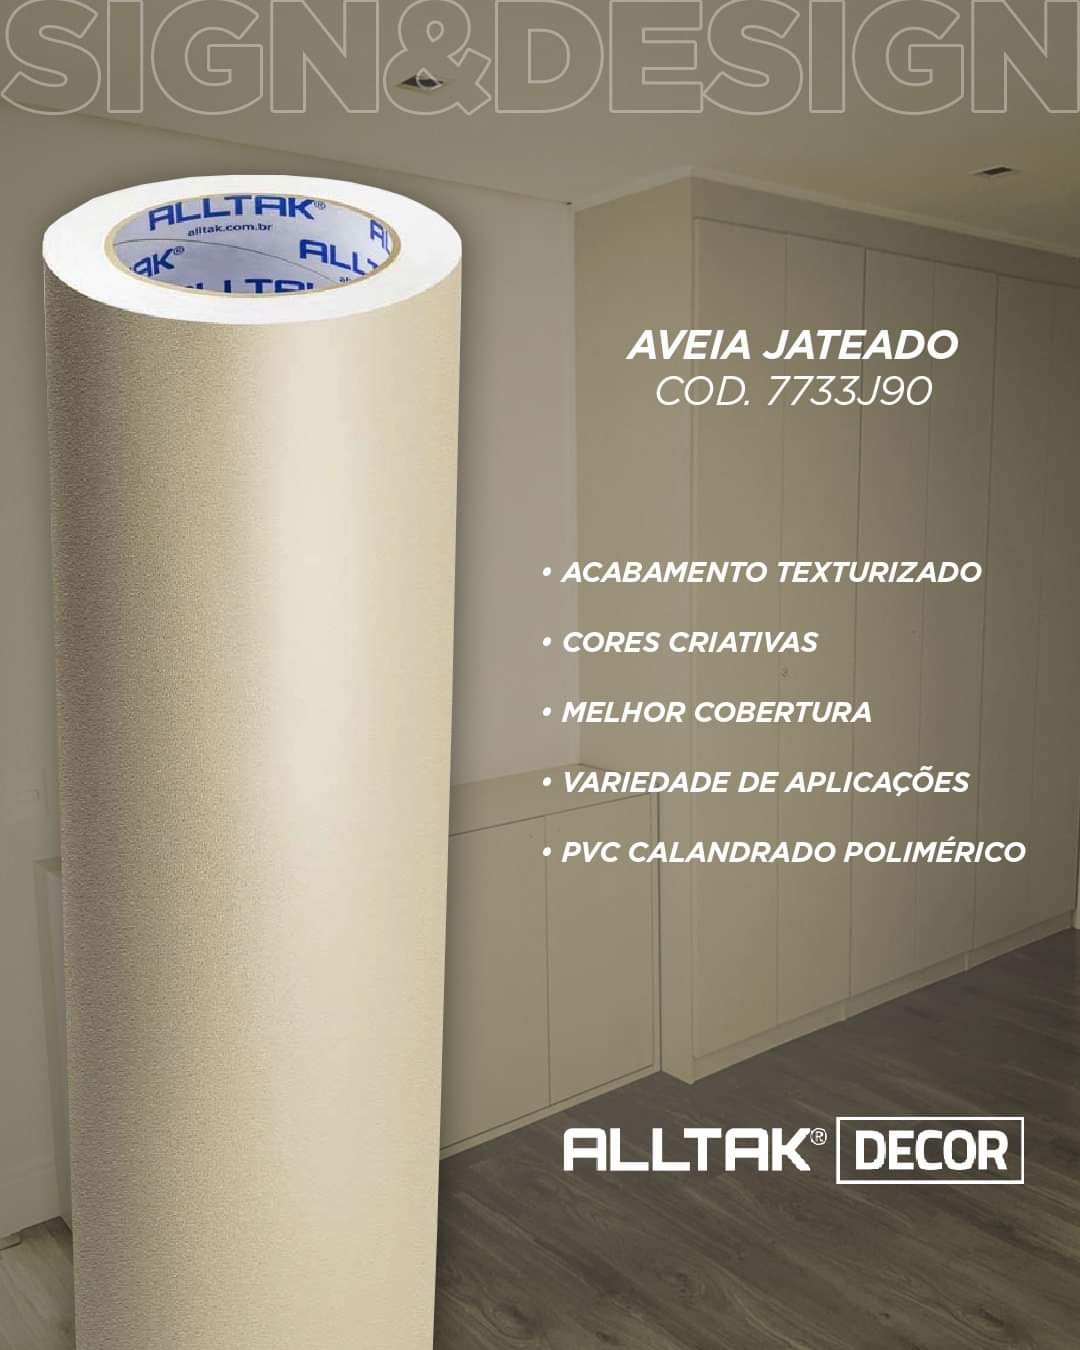 Adesivo Decorativo Premium Jateado Aveia 10m de comprimento por 1.22 cm Largura. - 3